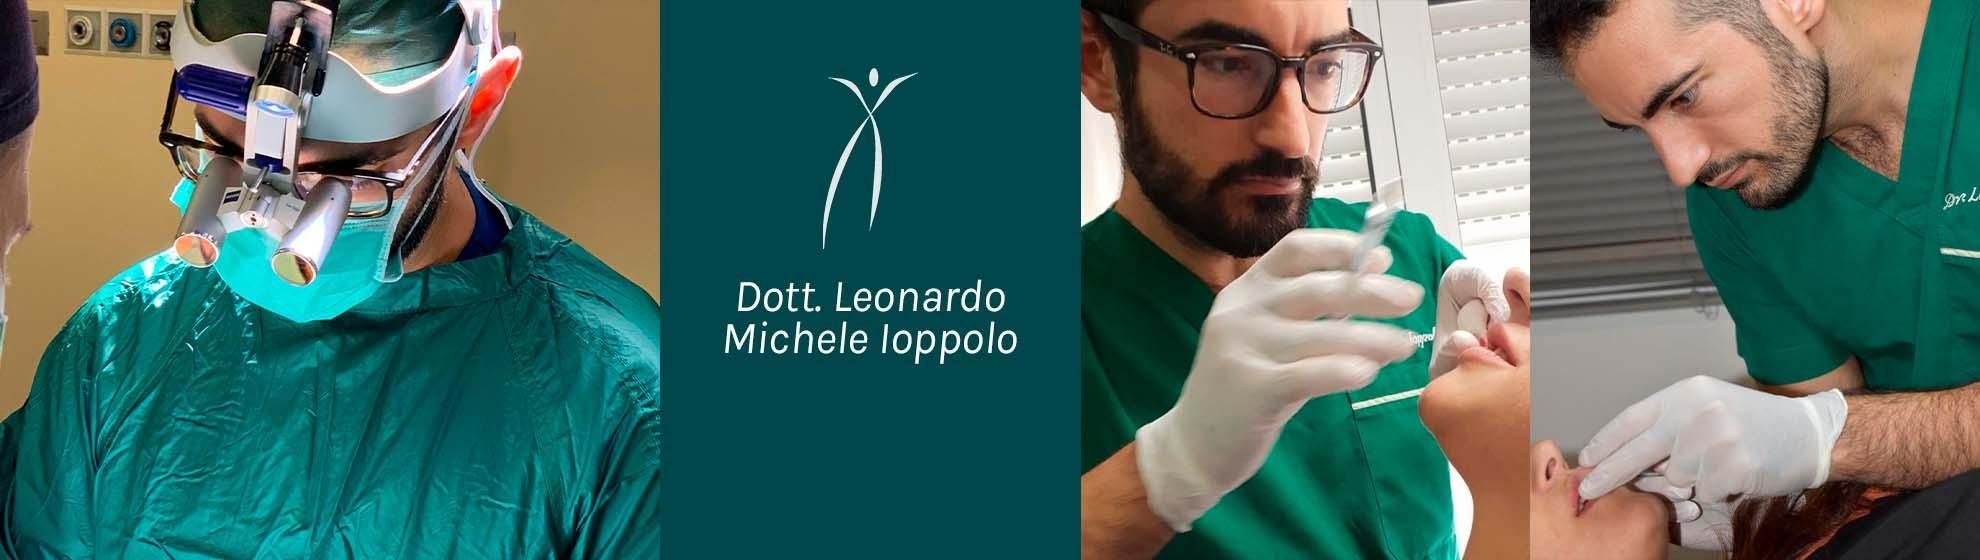 Dott. Leonardo Michele Ioppolo